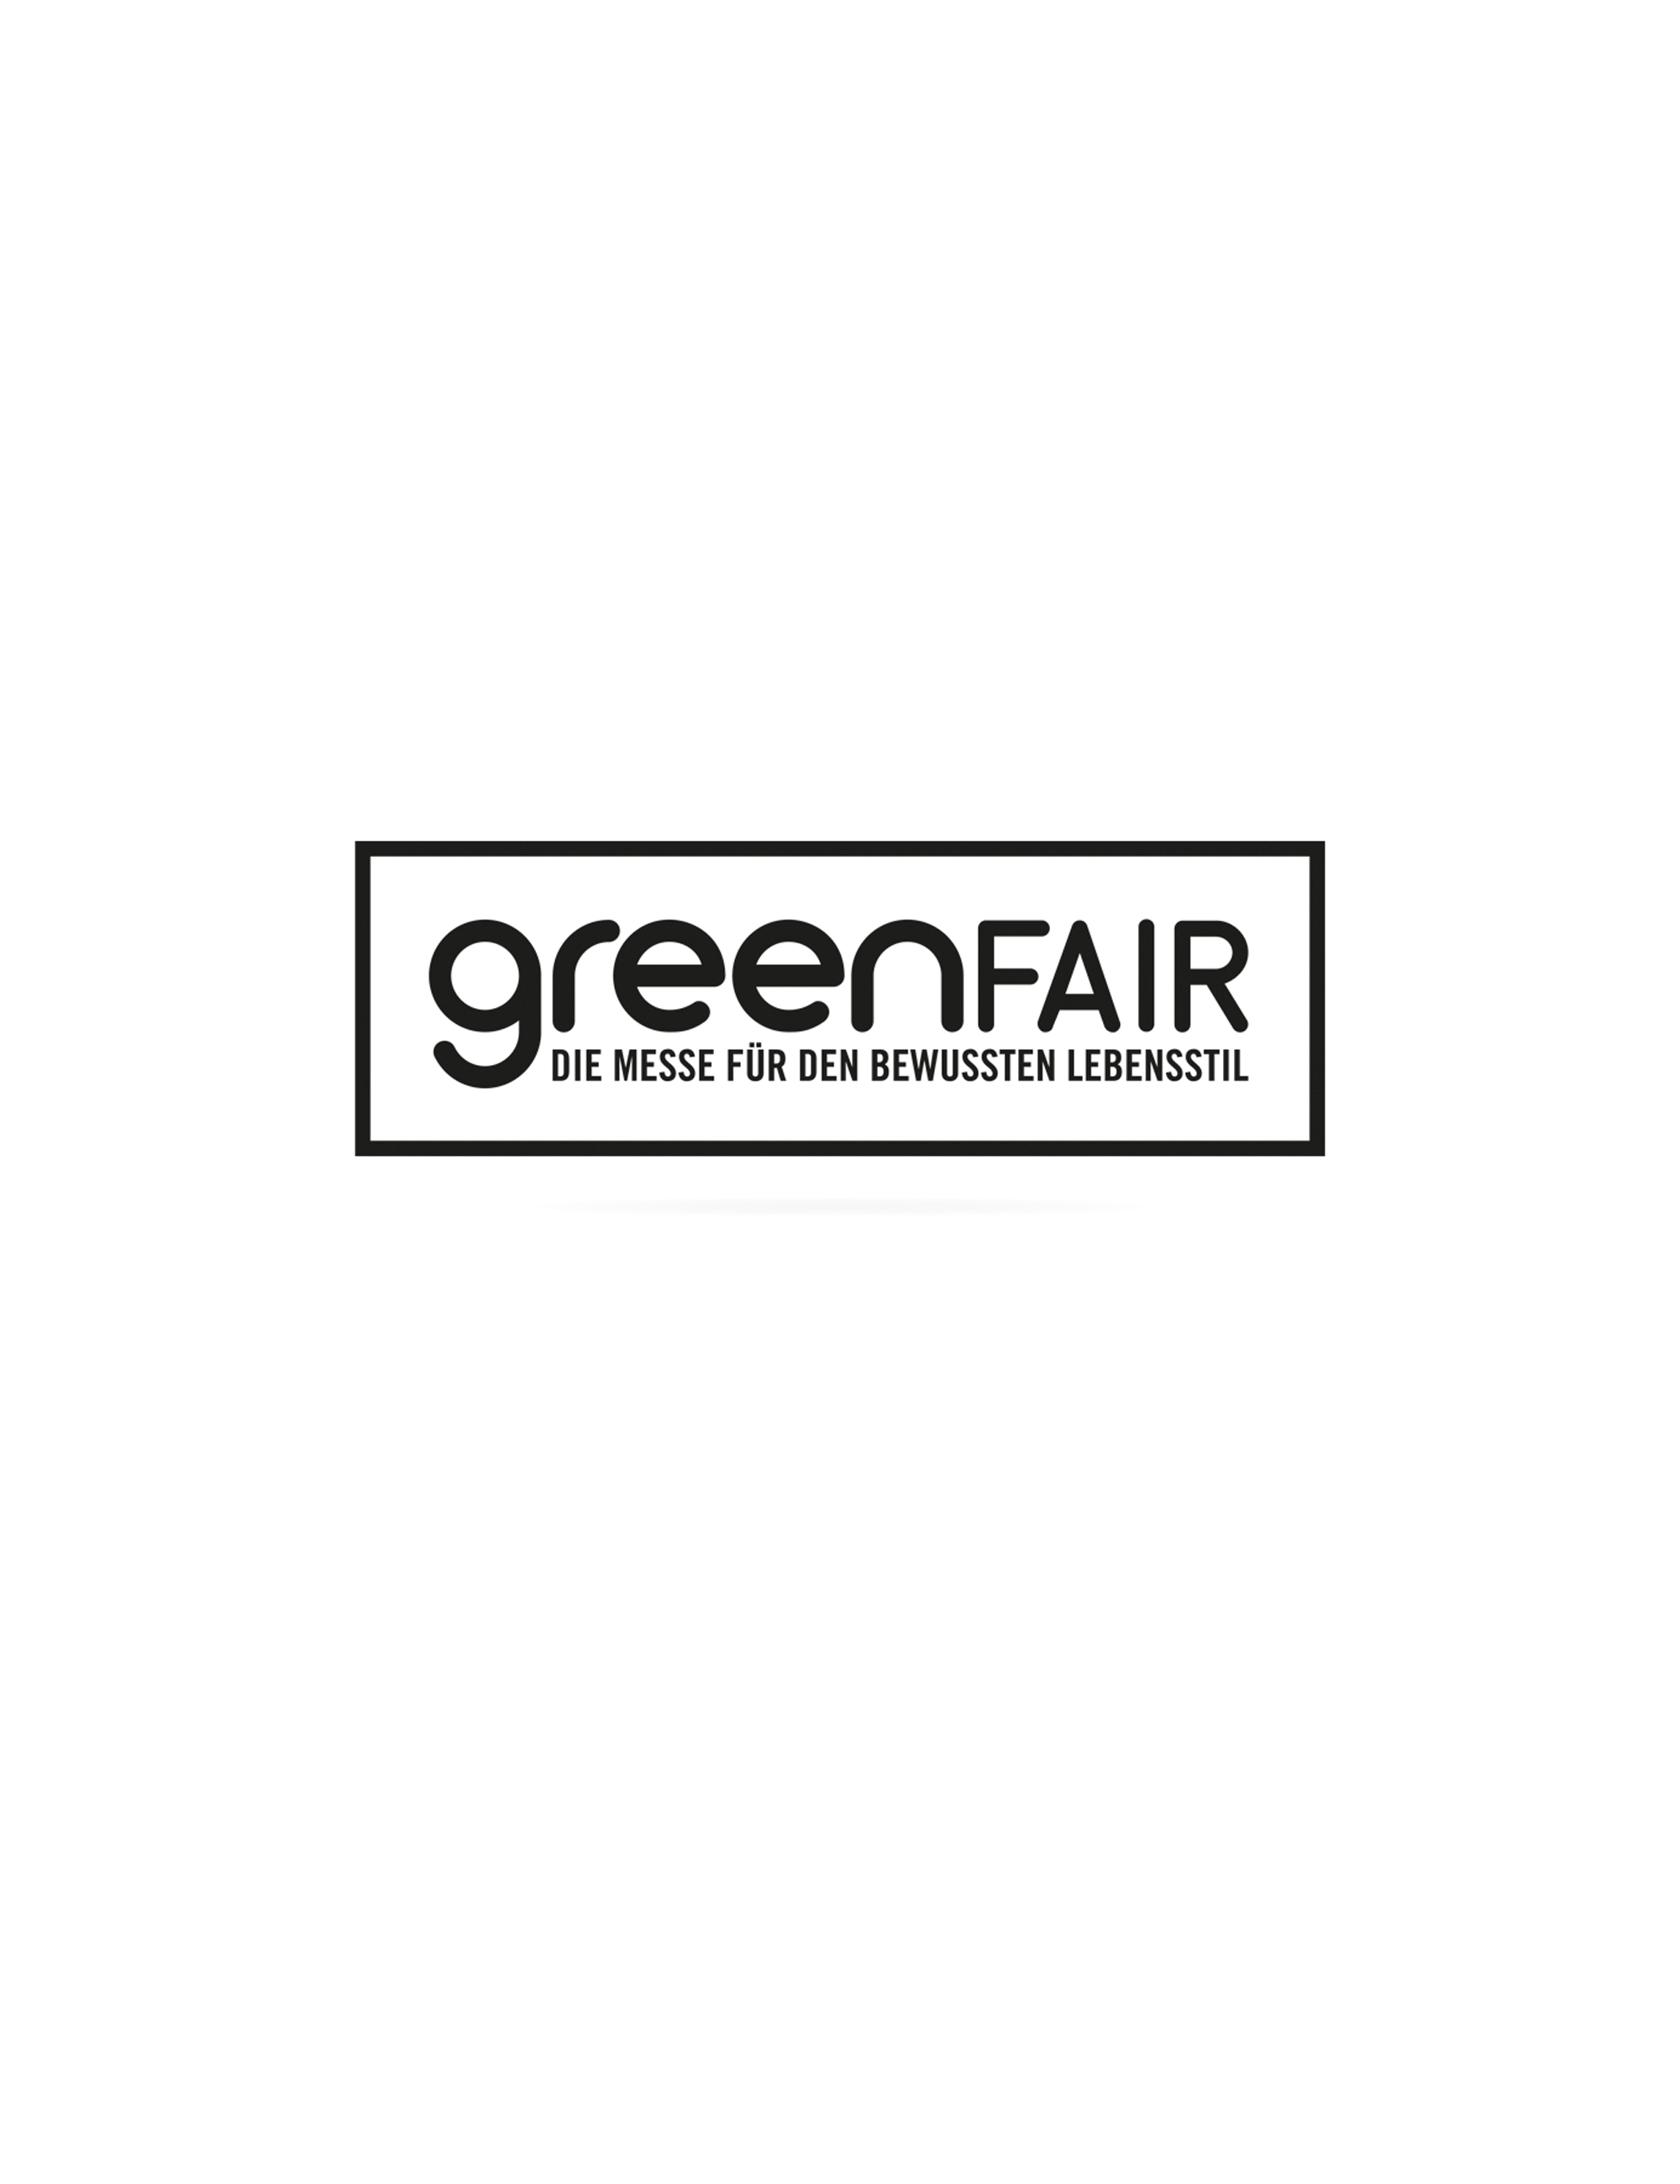 Greenfair Logo Gestaltung